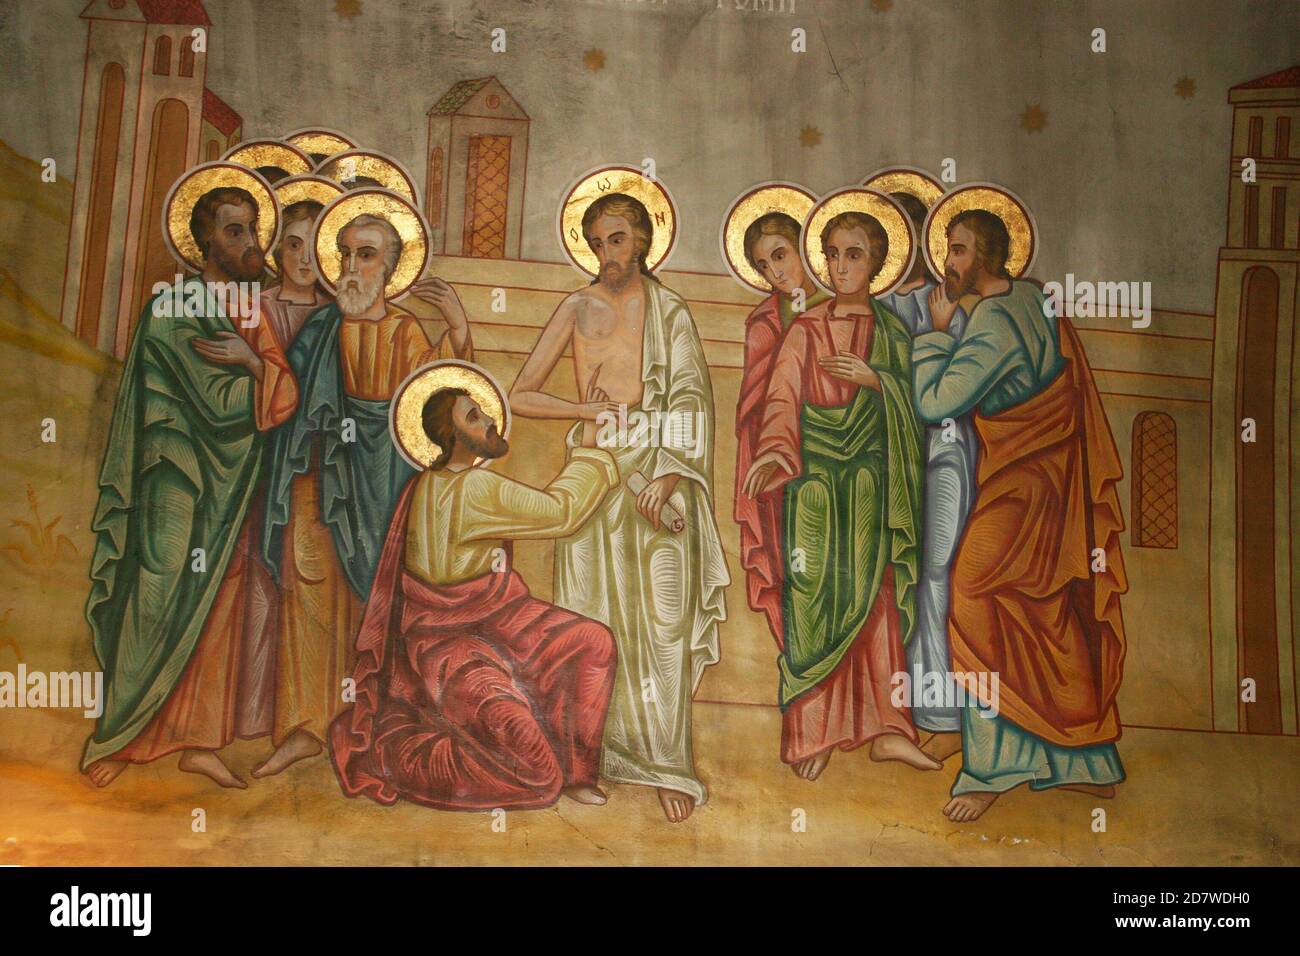 The Christian Orthodox church in Tifesti, Vrancea County, Romania. Fresco depicting Jesus appearing to the apostle Thomas, who touches his side. Stock Photo